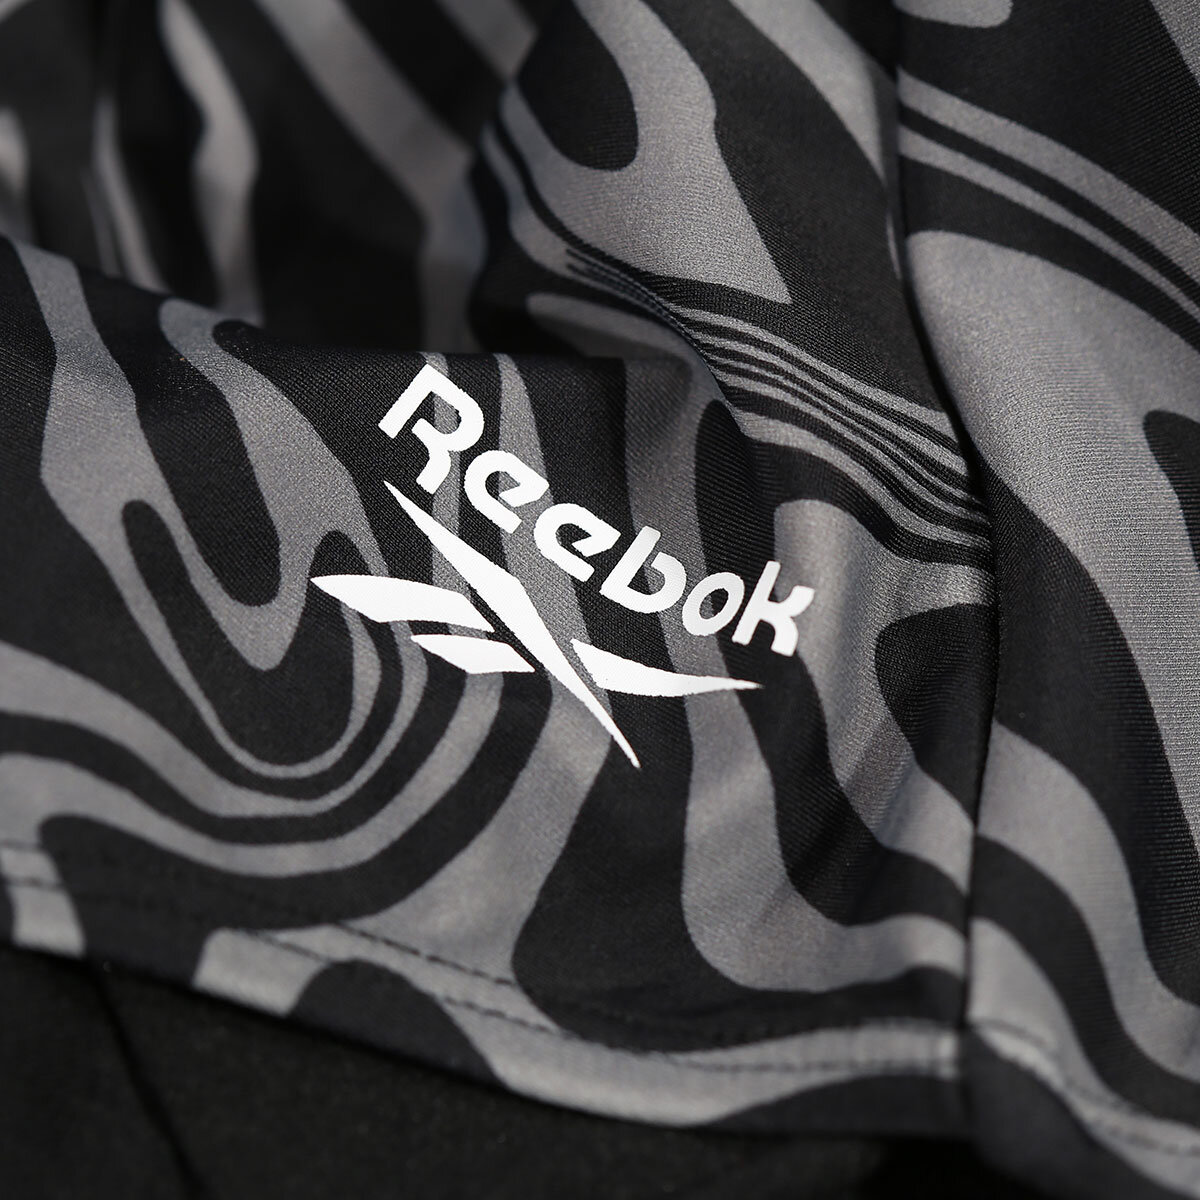 Reebok 1 Piece Swimsuit in Black Animal Print